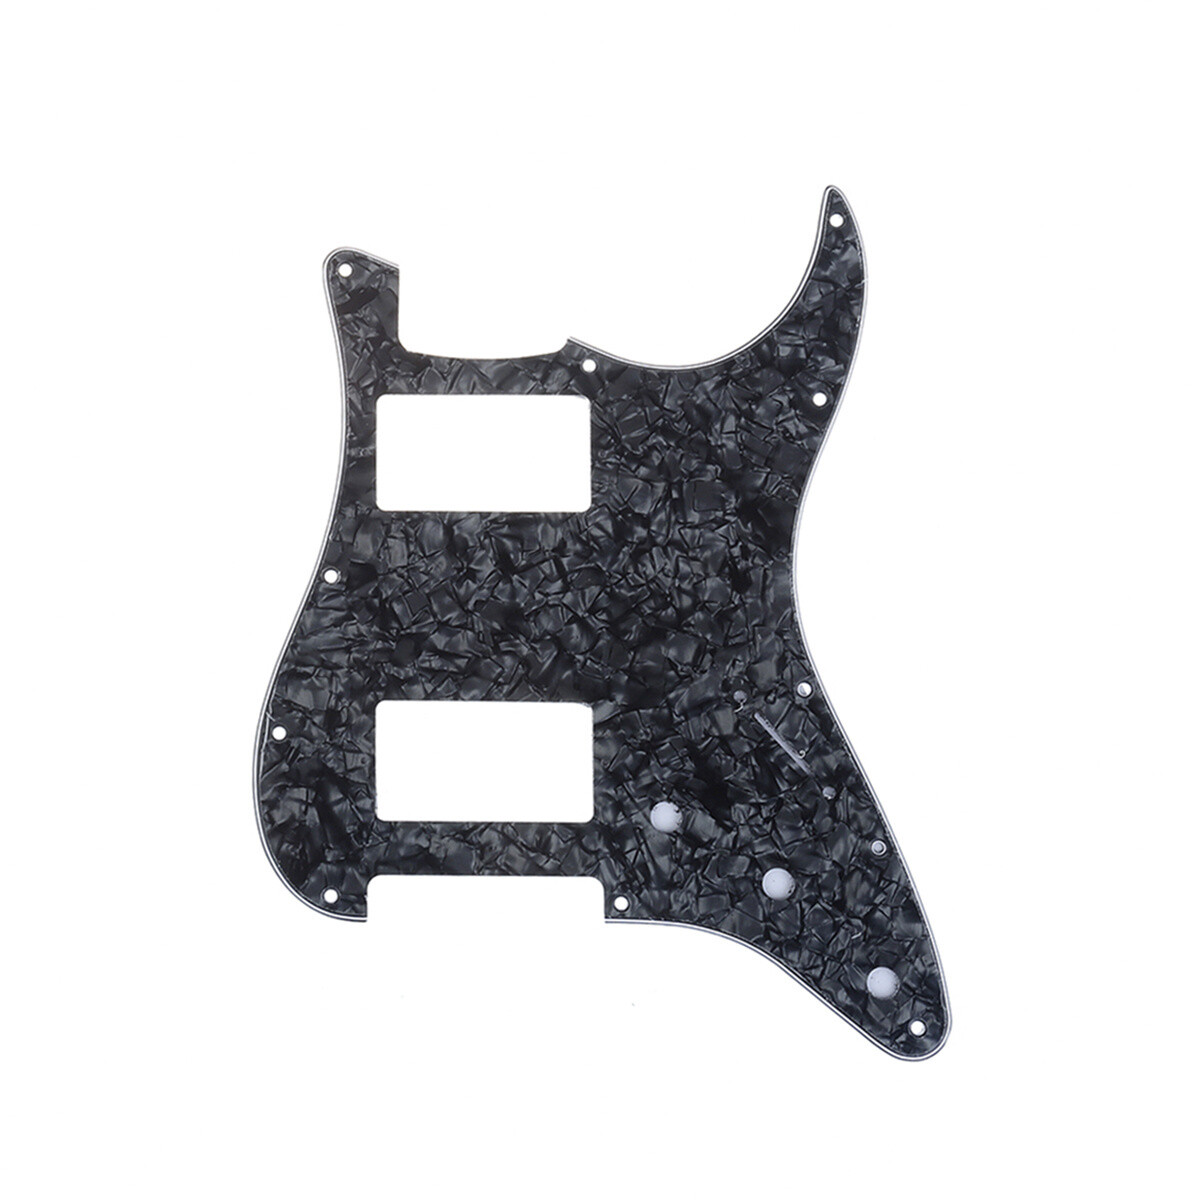 Brio H H Strat® 11 Hole Pickguard fits American/MIM Black Pearloid